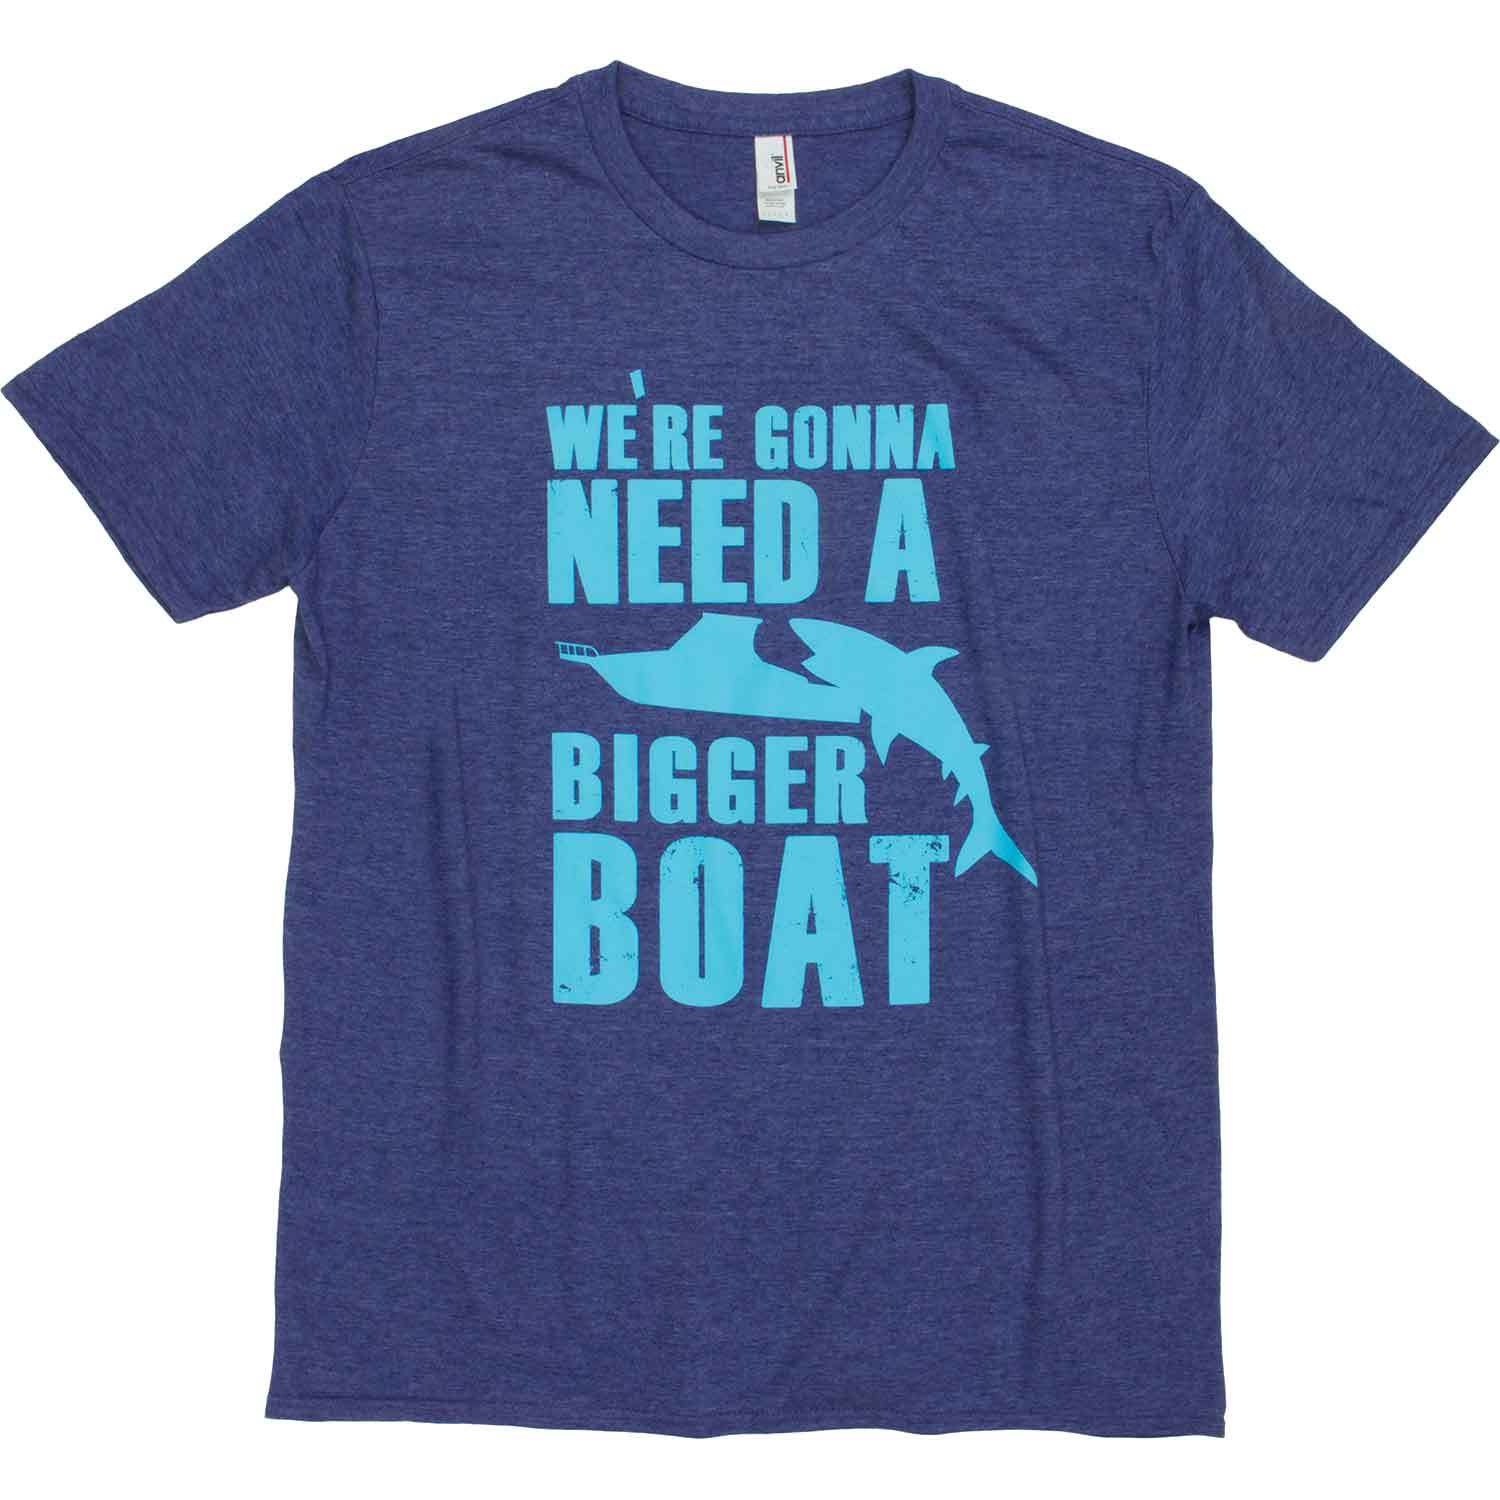 WEST MARINE Men's Size XL Shirt Blue Sport Fishing Boat Print